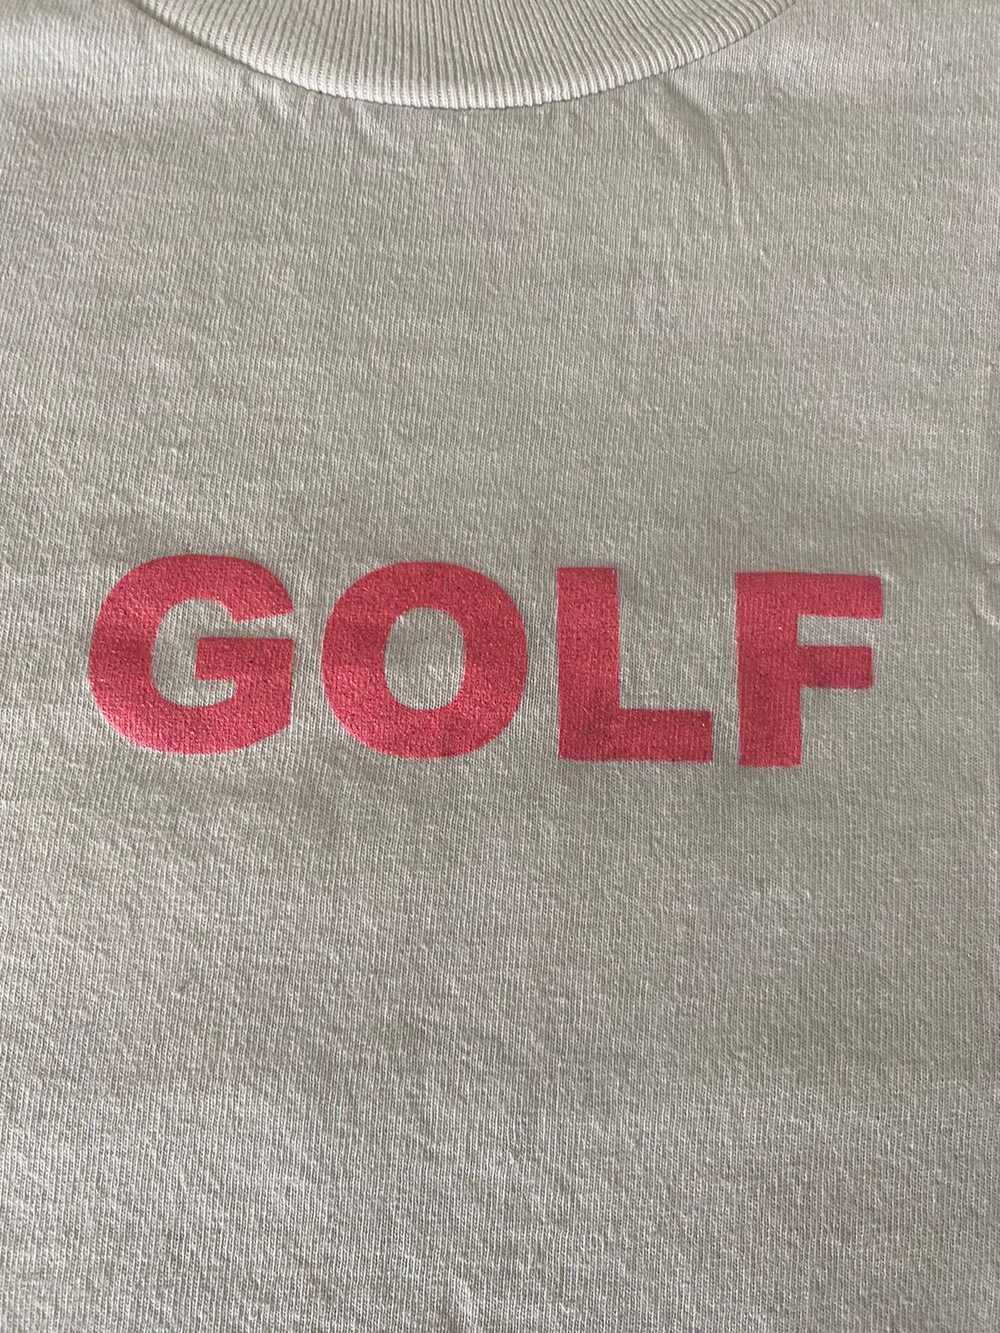 Golf Wang Golf wang glitter T - image 2